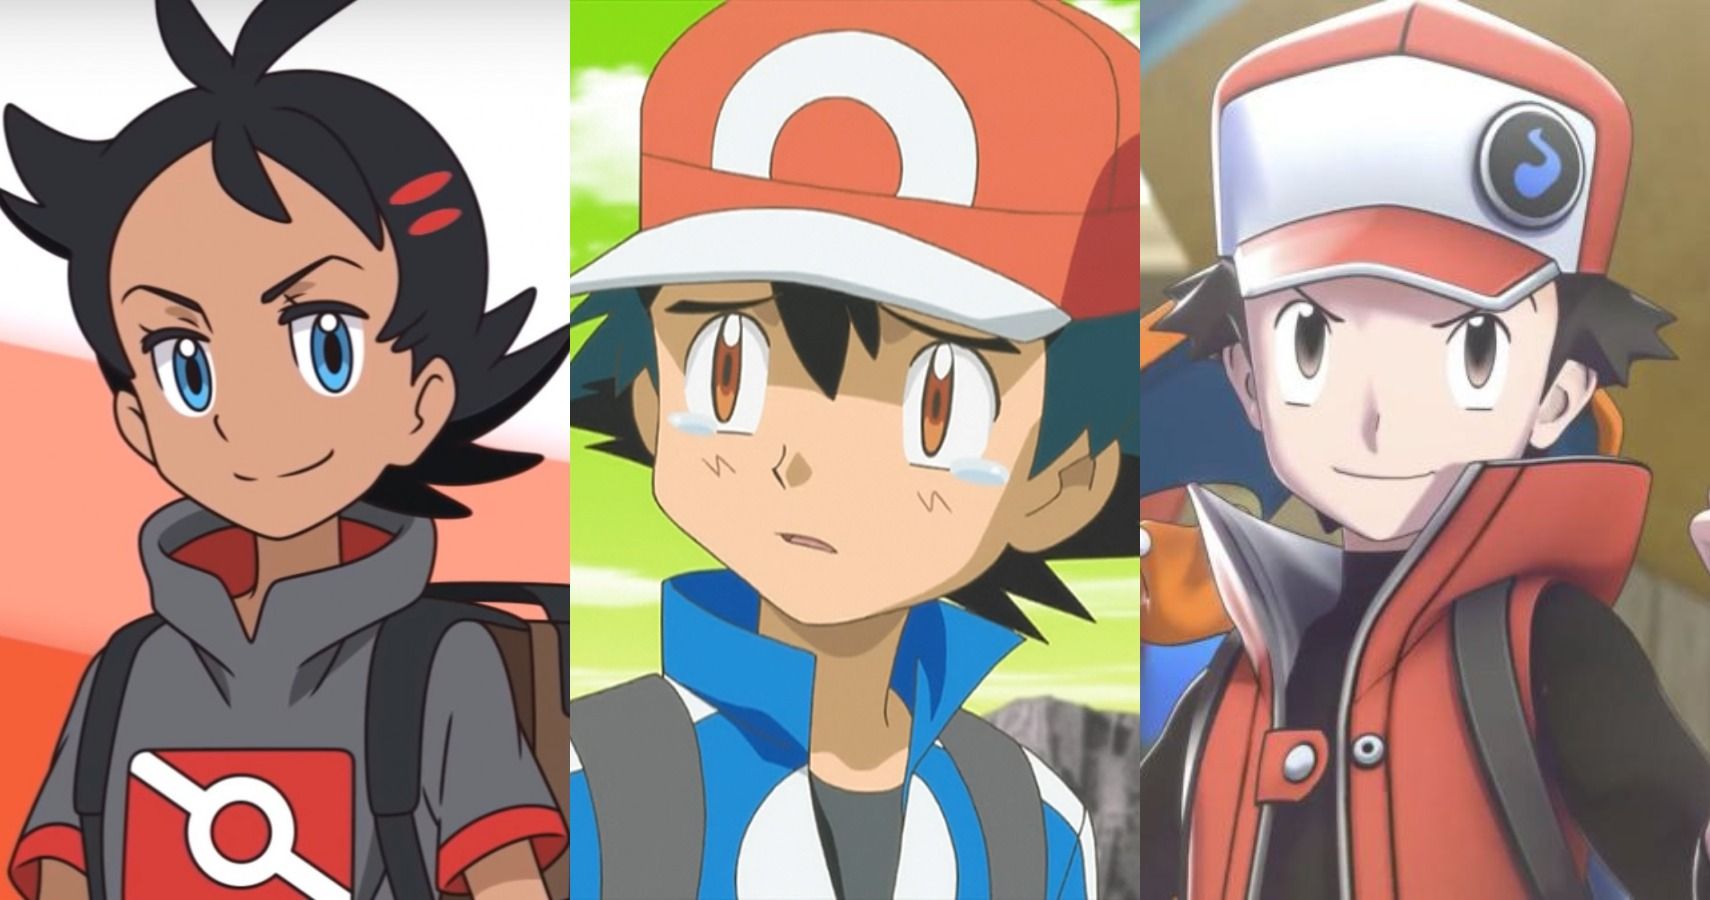 New Pokemon anime announced Ash no longer protagonist  9GAG